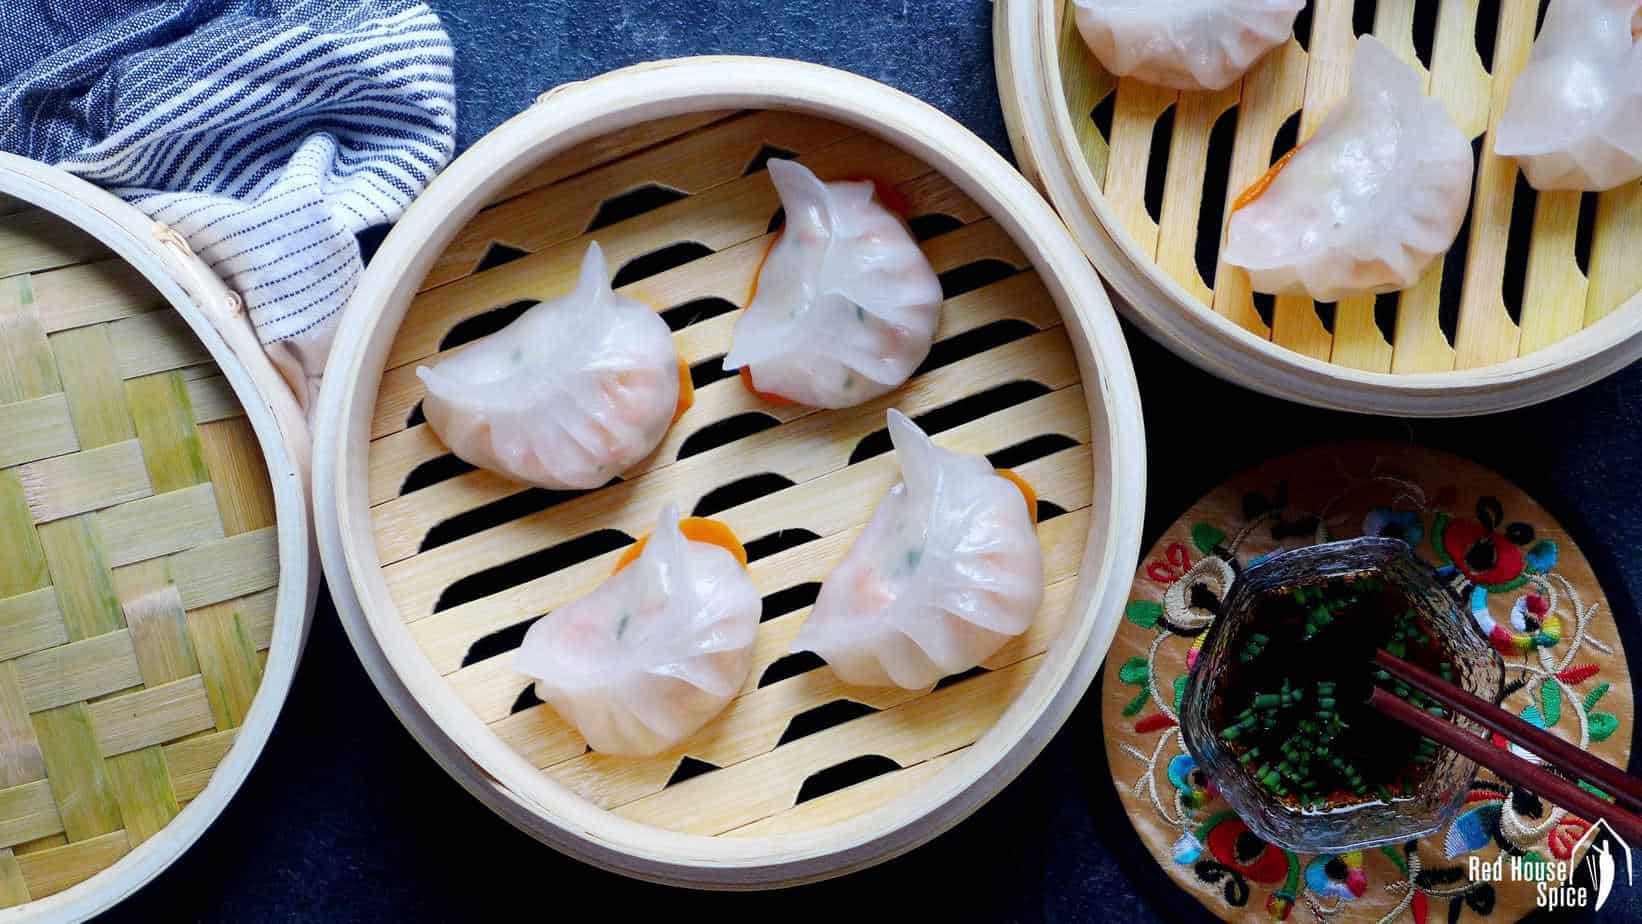 Har gow, crystal shrimp dumplings in steamer baskets